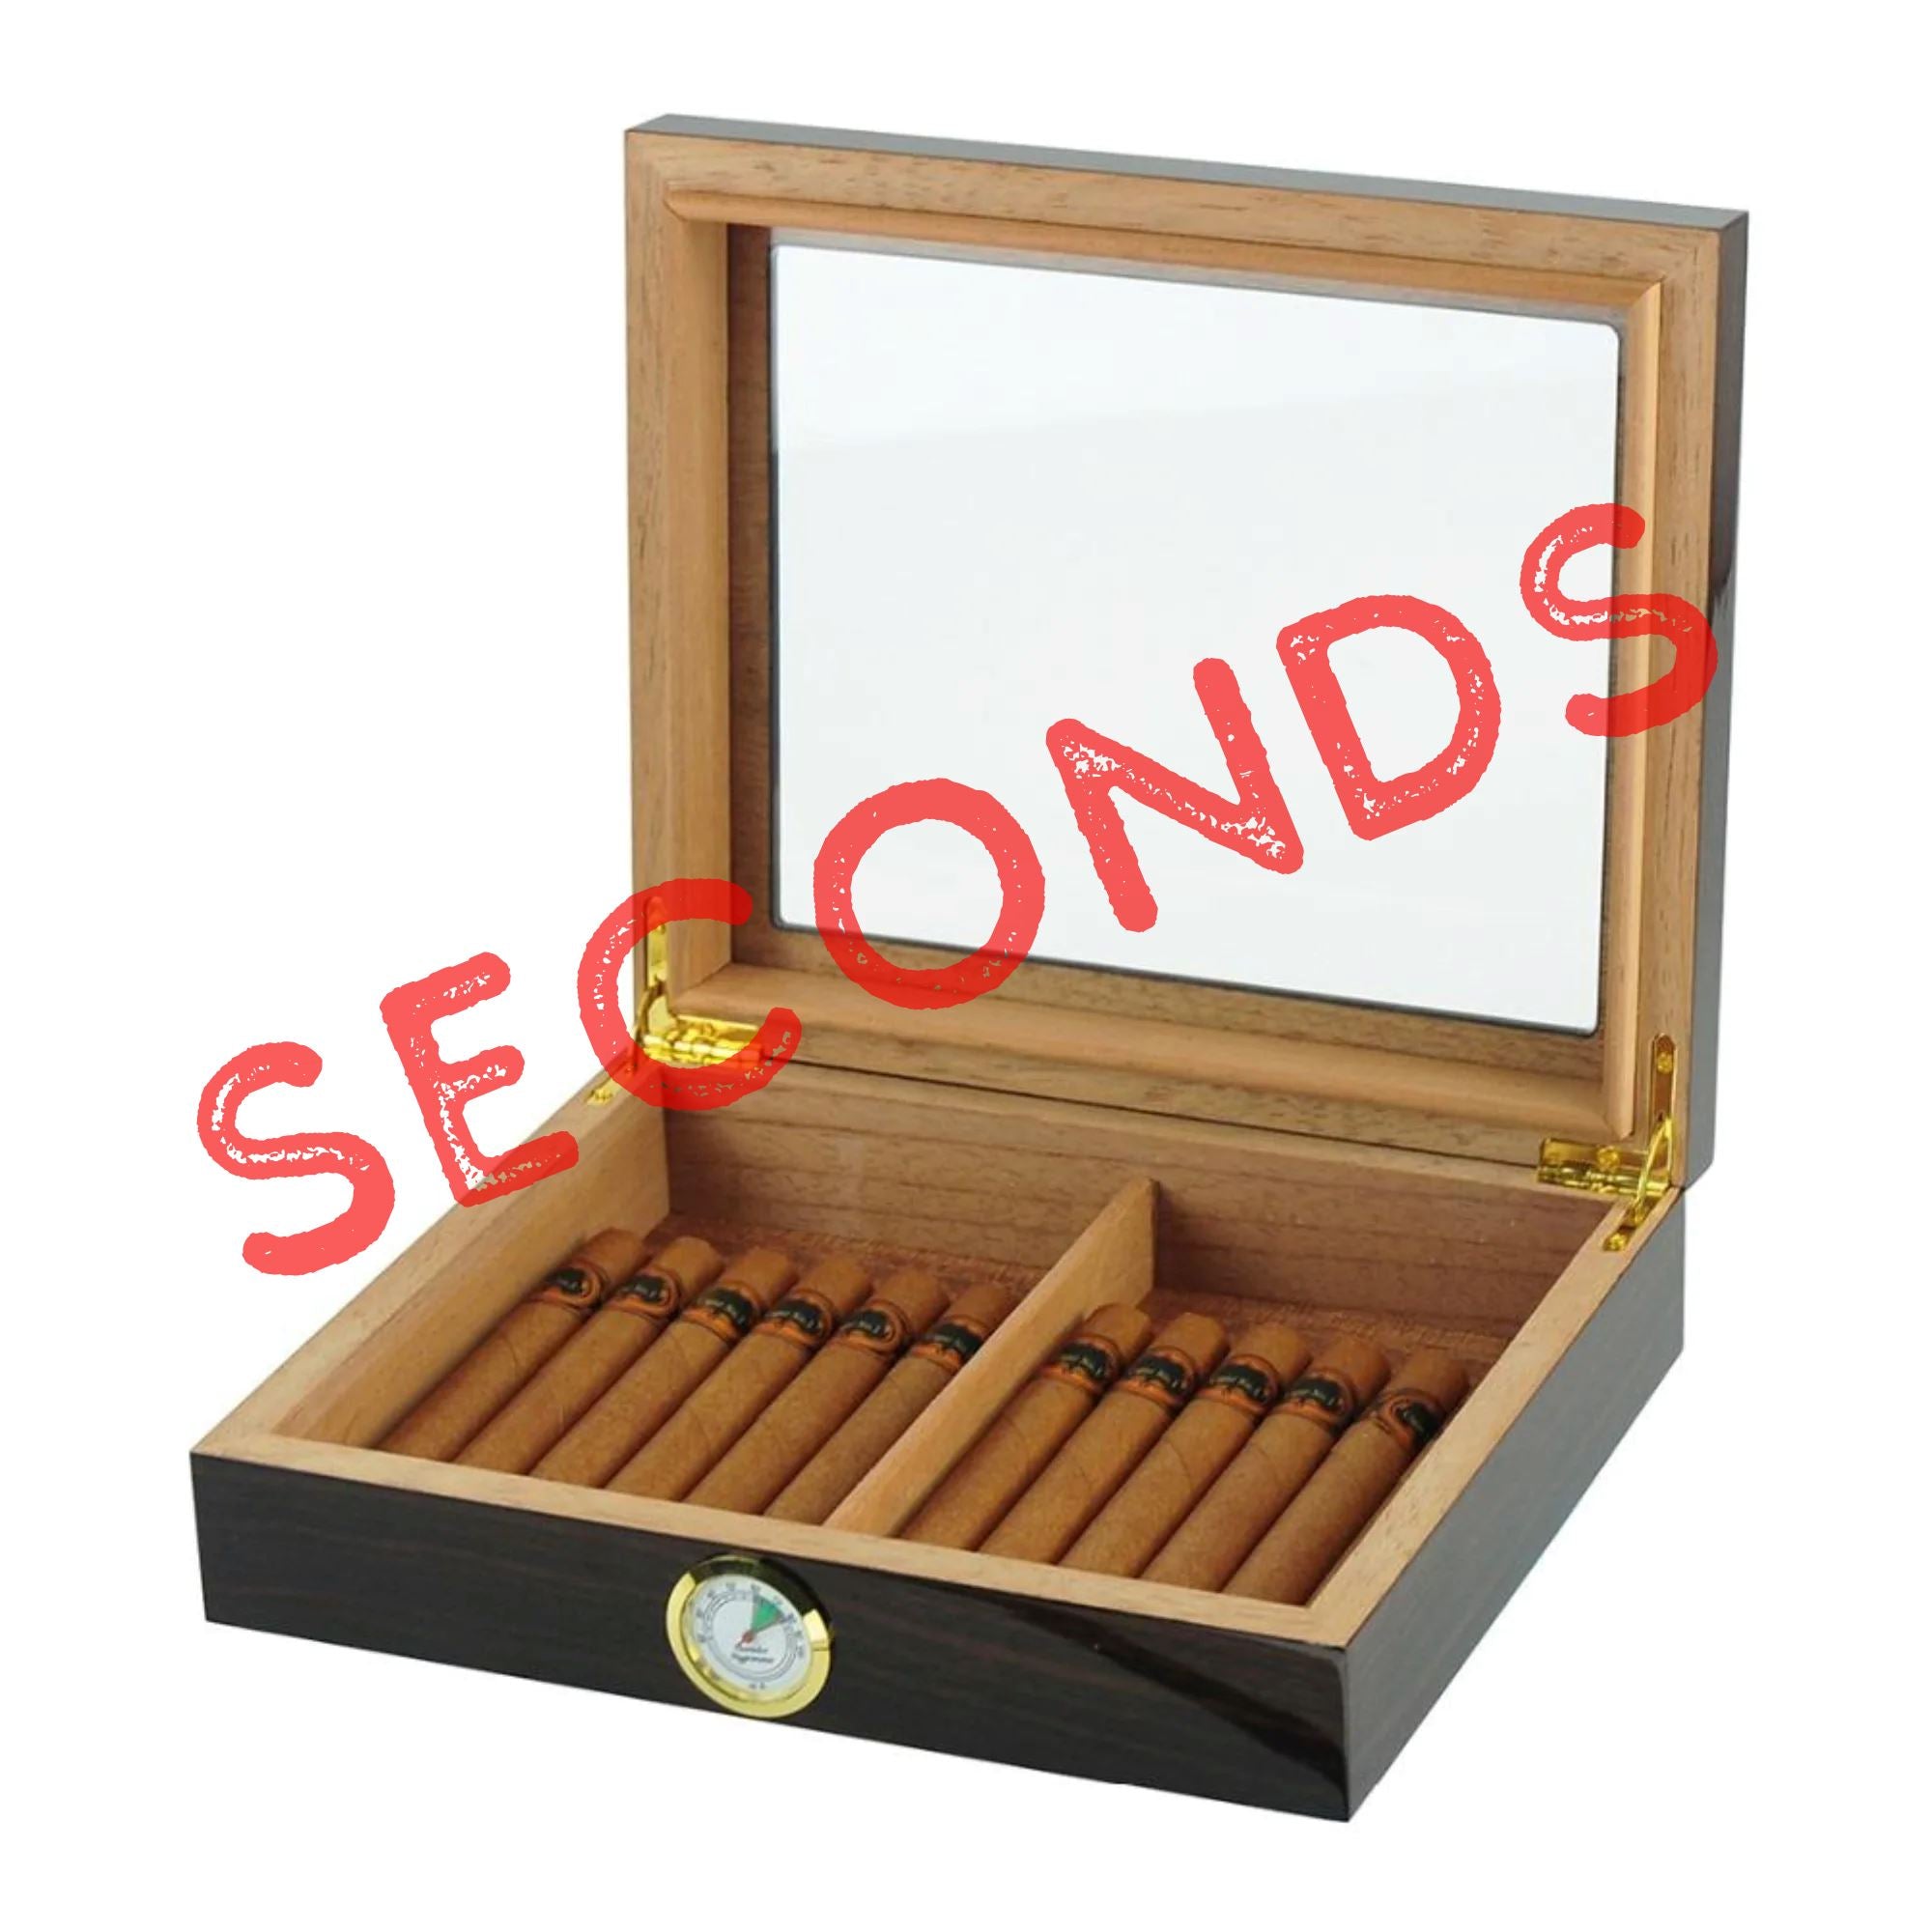 Seconds - 12-20 CT Walnut Cigar Humidor Spanish Cedar Box for Cigars Seconds Clinks 